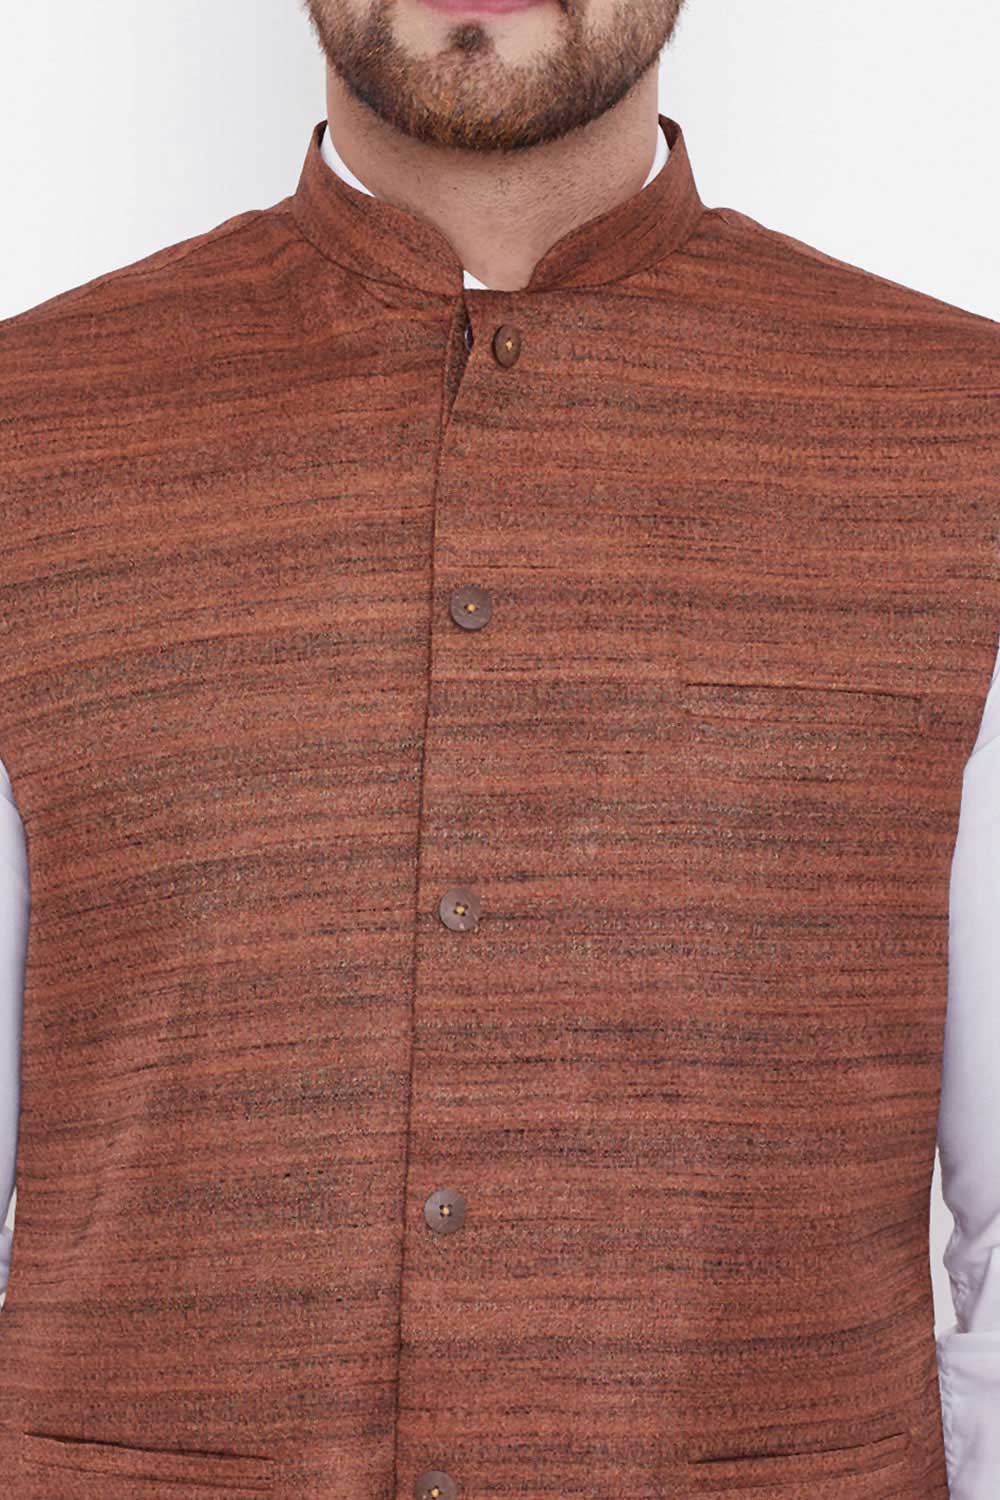 Stripe Coffee Brown Nehru Jacket for Casual Wear